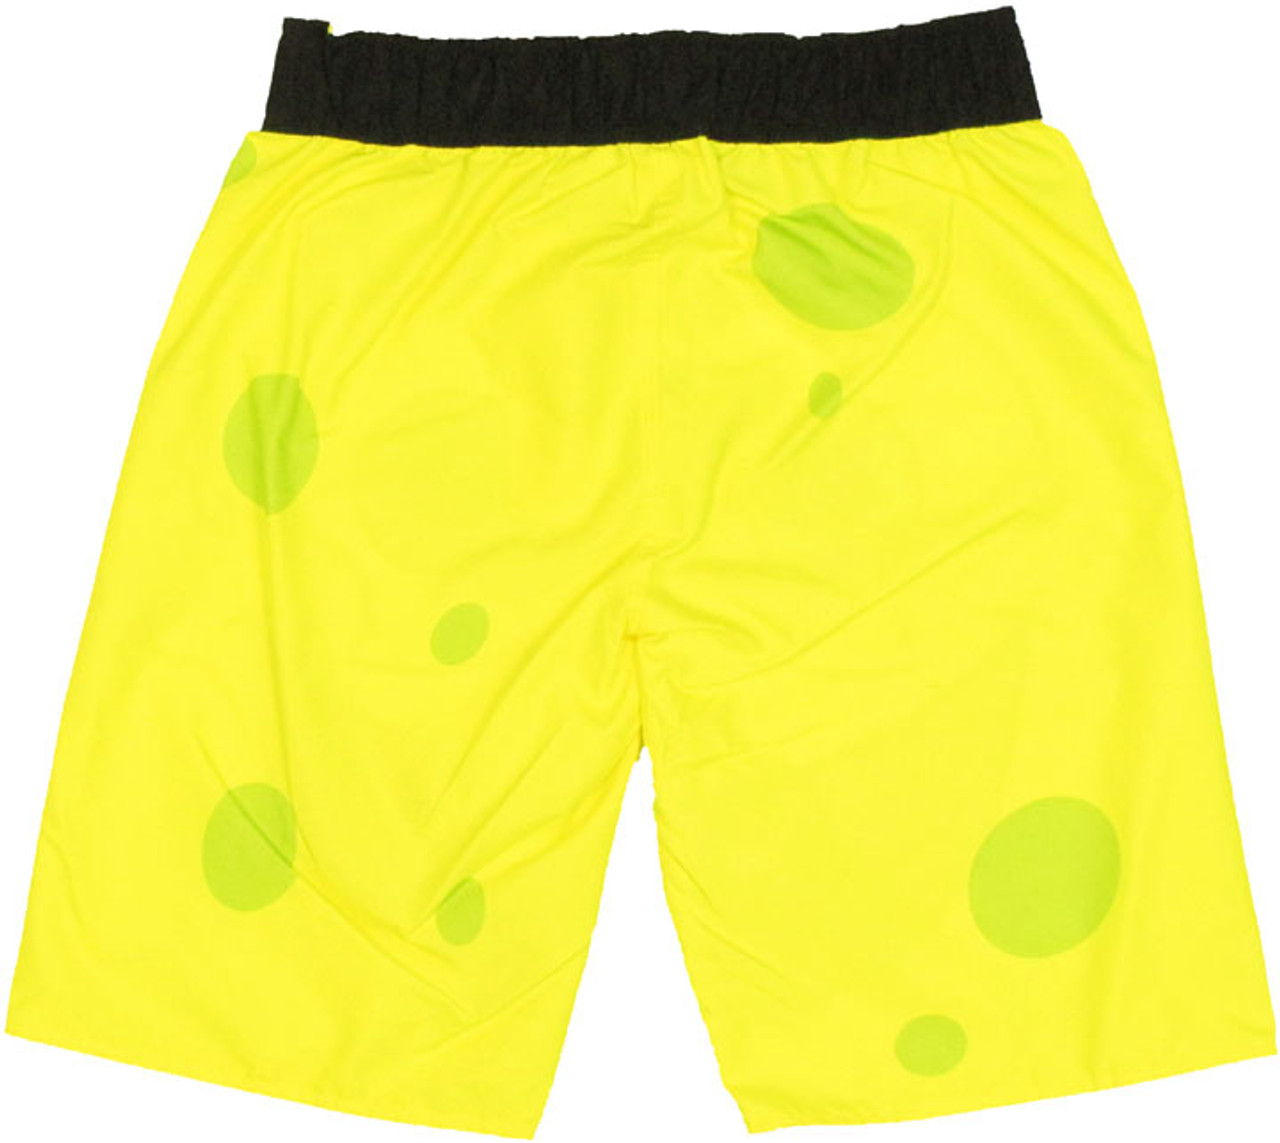 Spongebob Squarepants Shorts